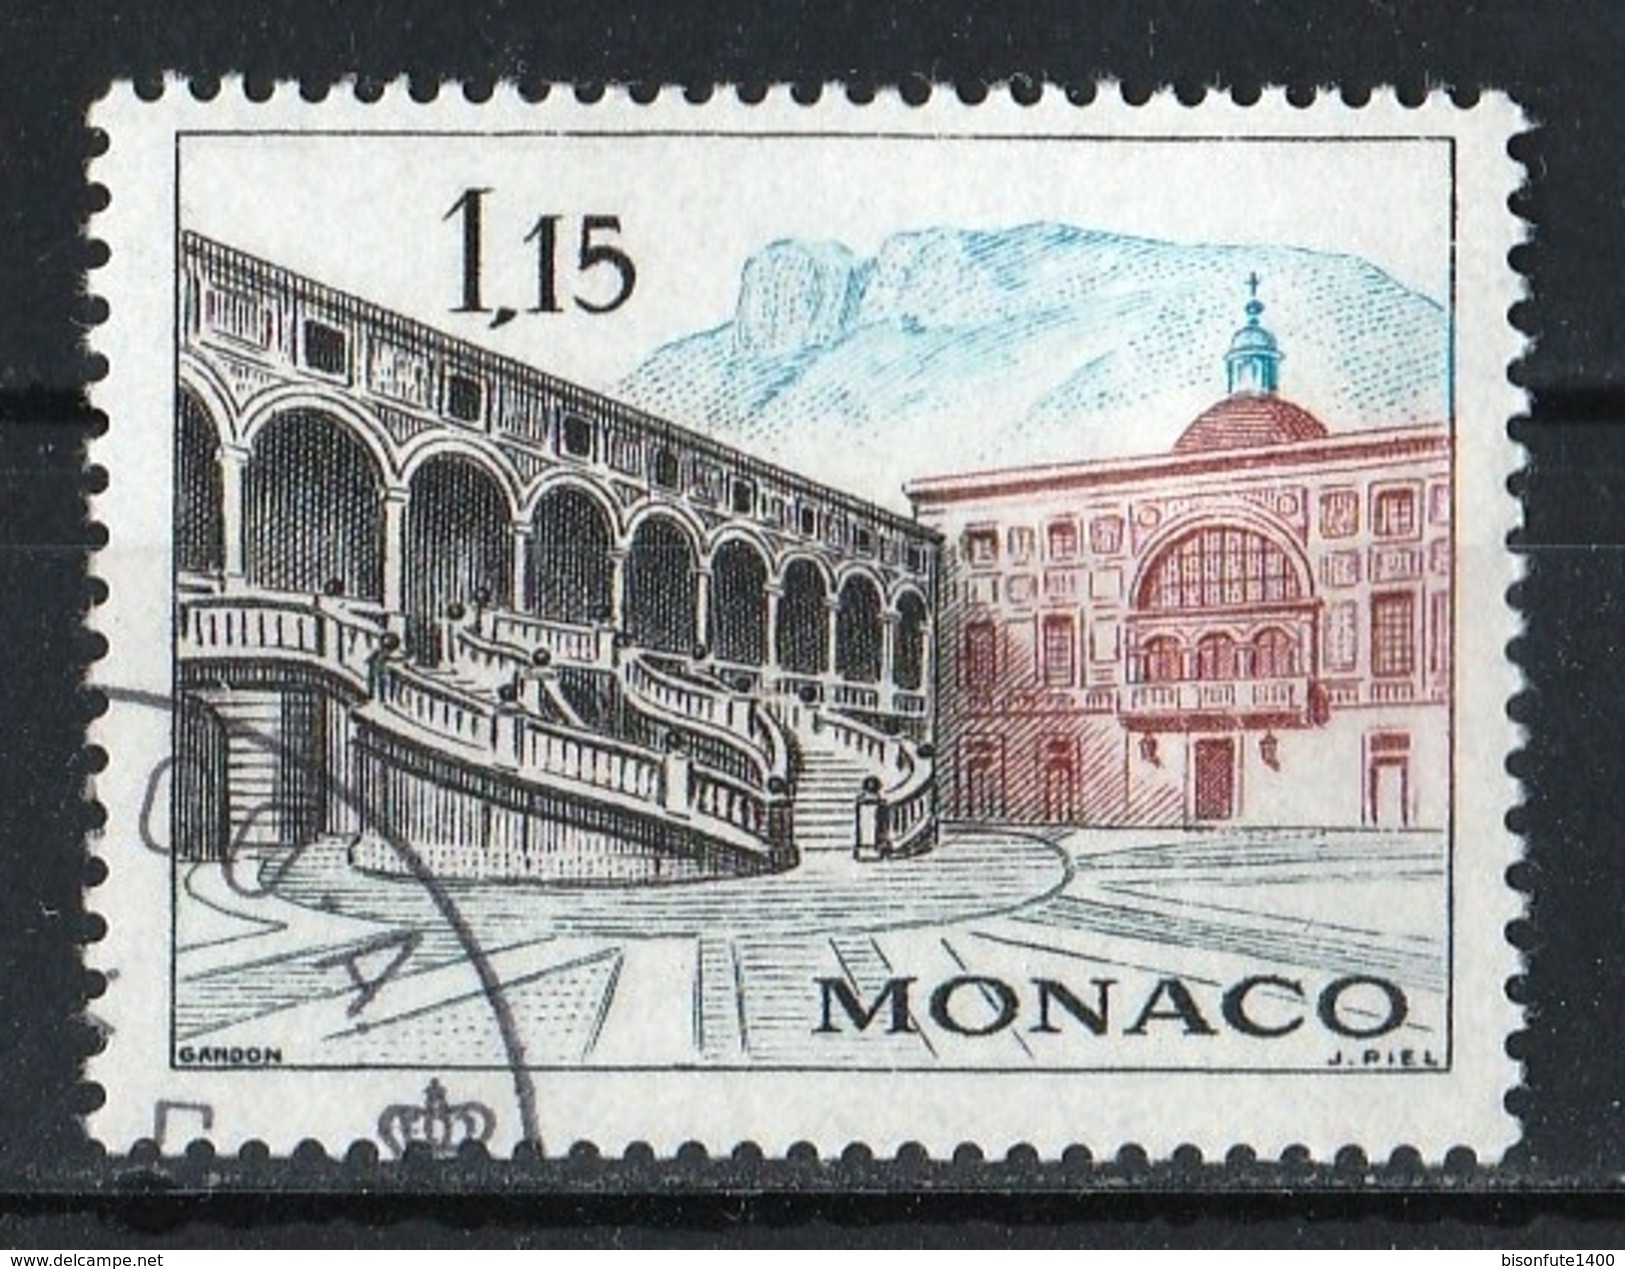 Monaco 1969 : Timbres Yvert & Tellier N° 772 à 778. - Usados